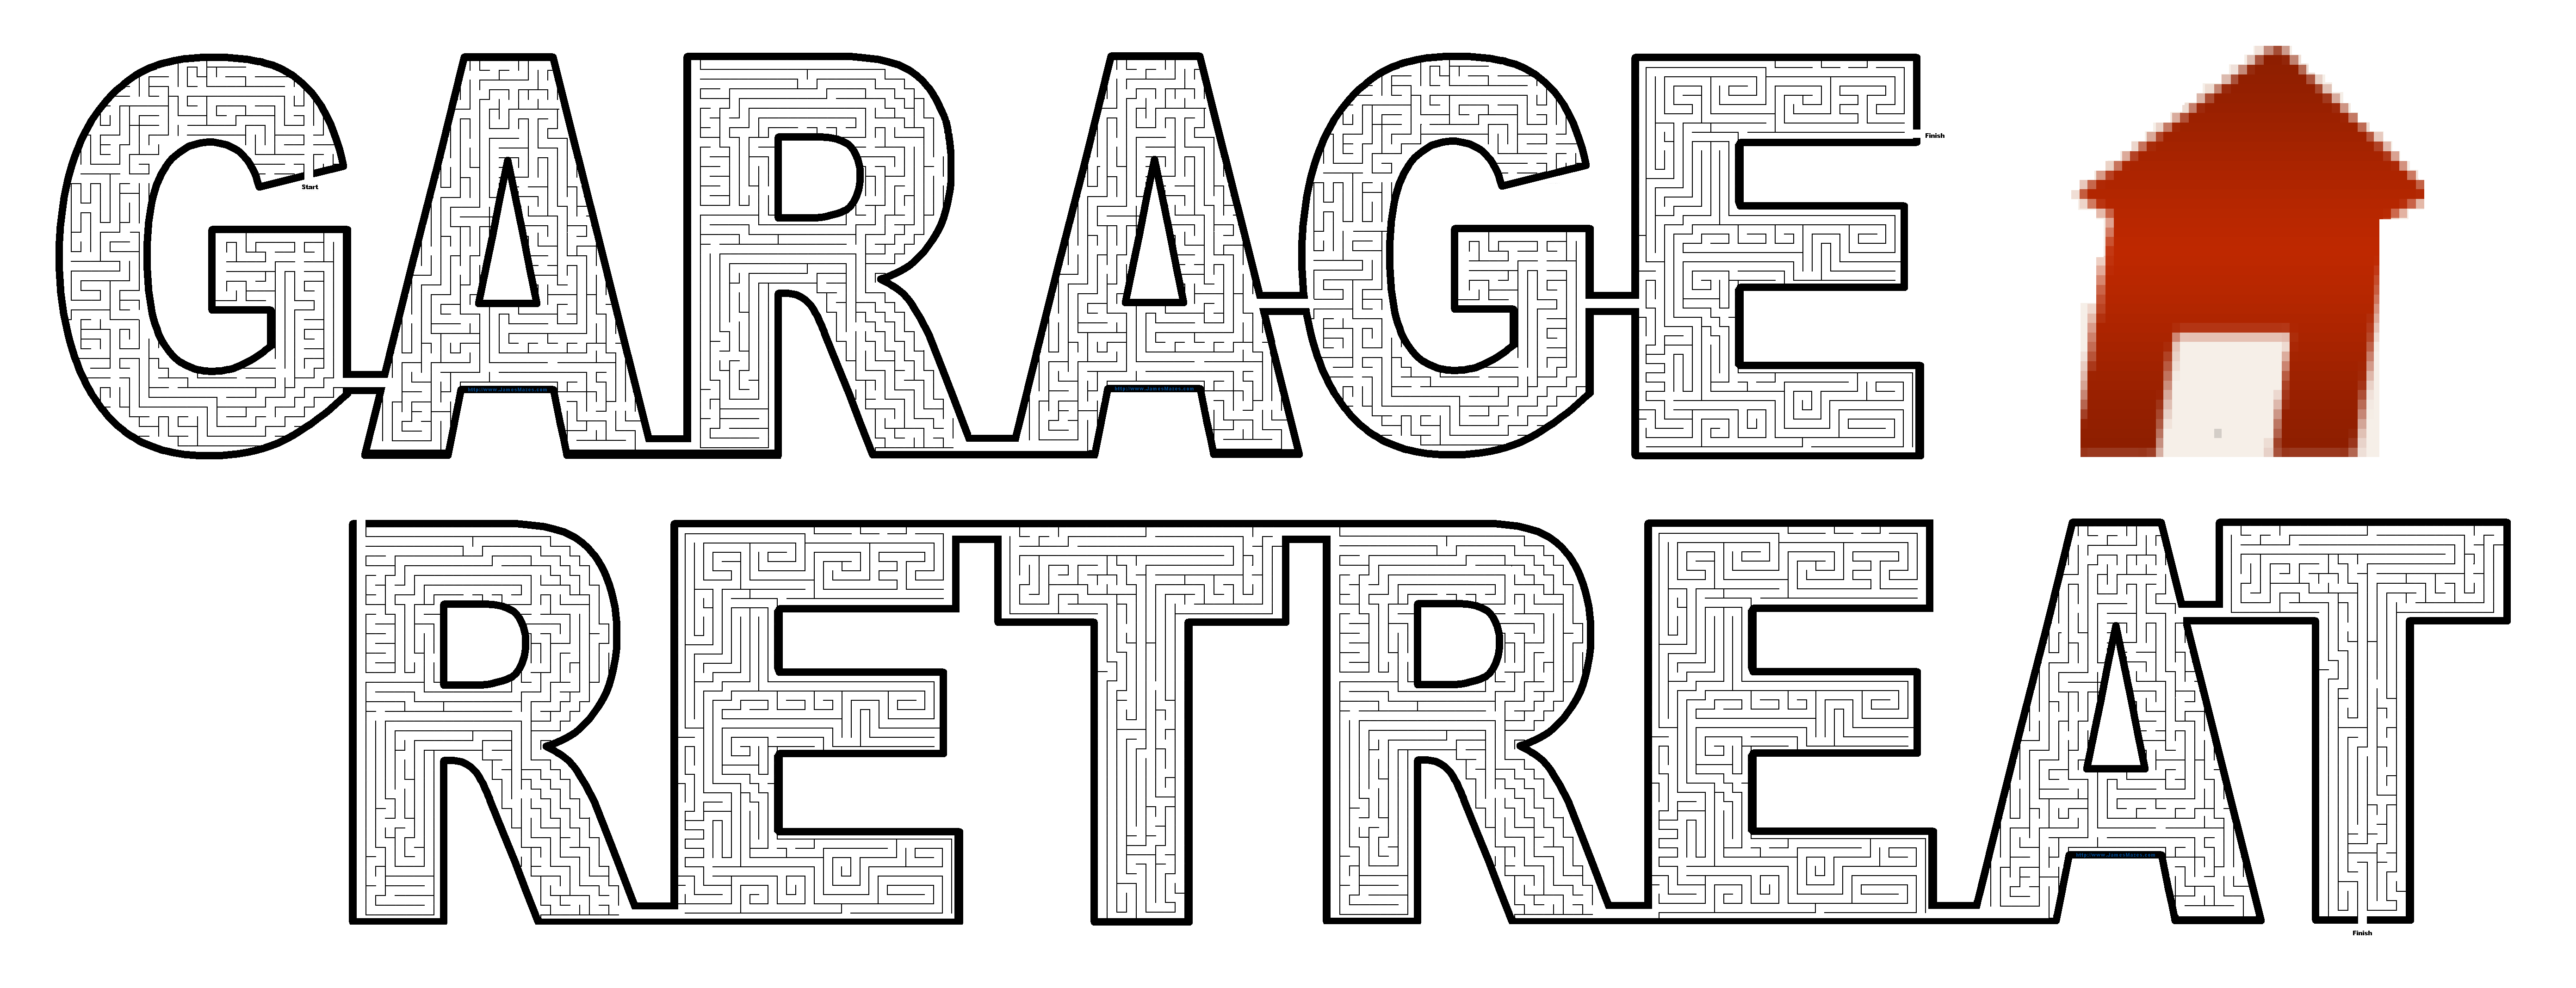 Garage-retreat-maze-050117.png